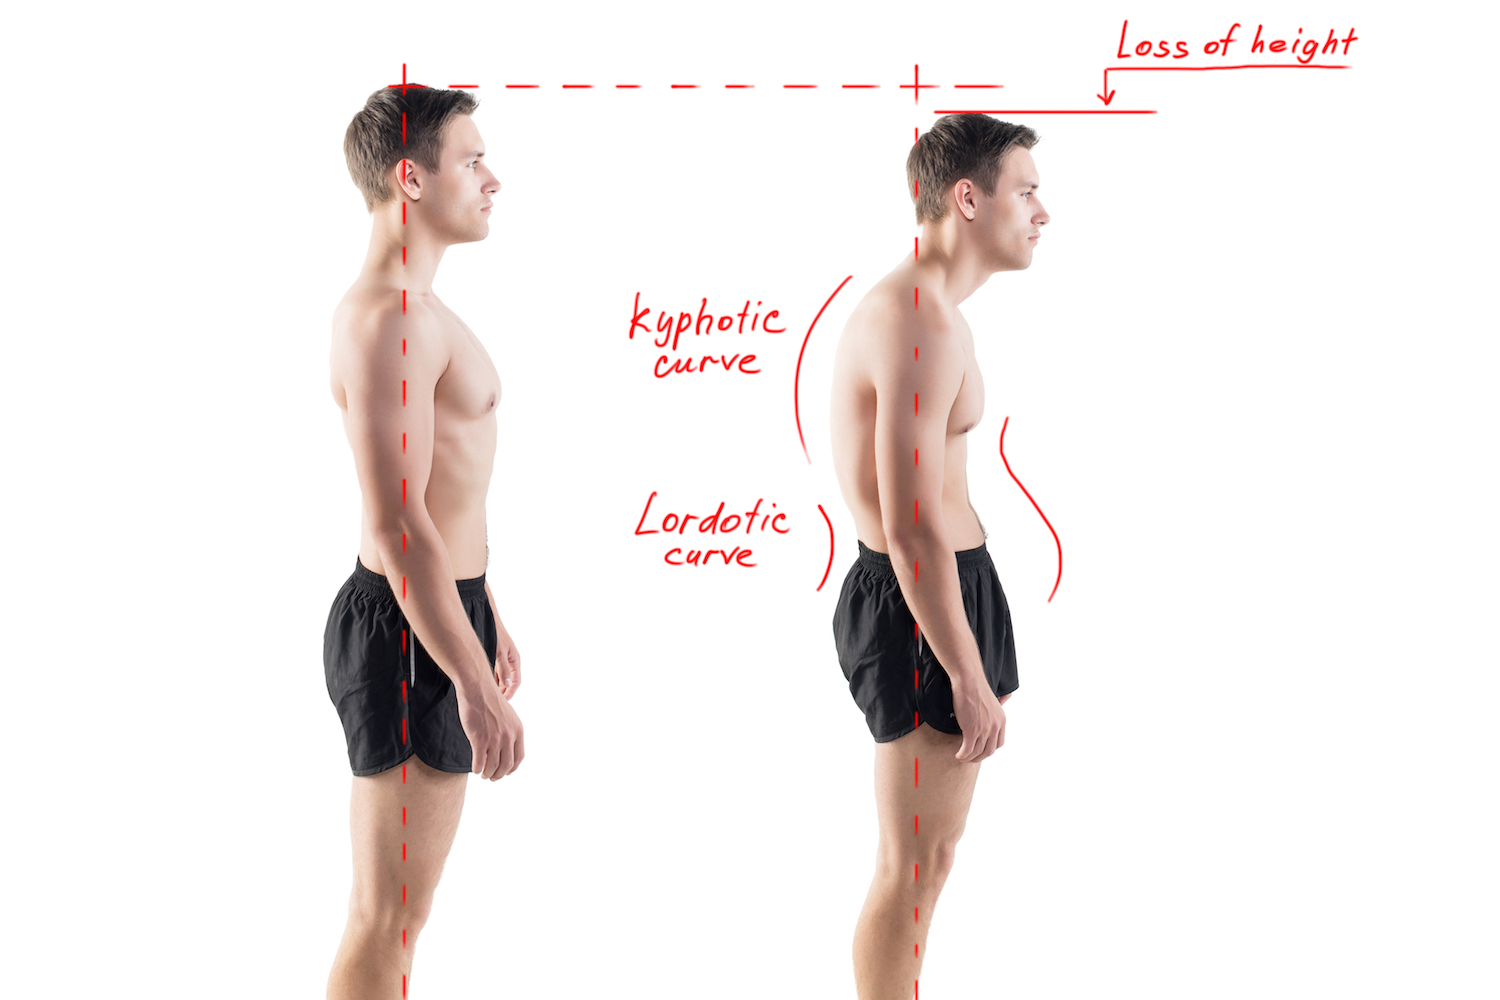 forward head posture exercises correcting